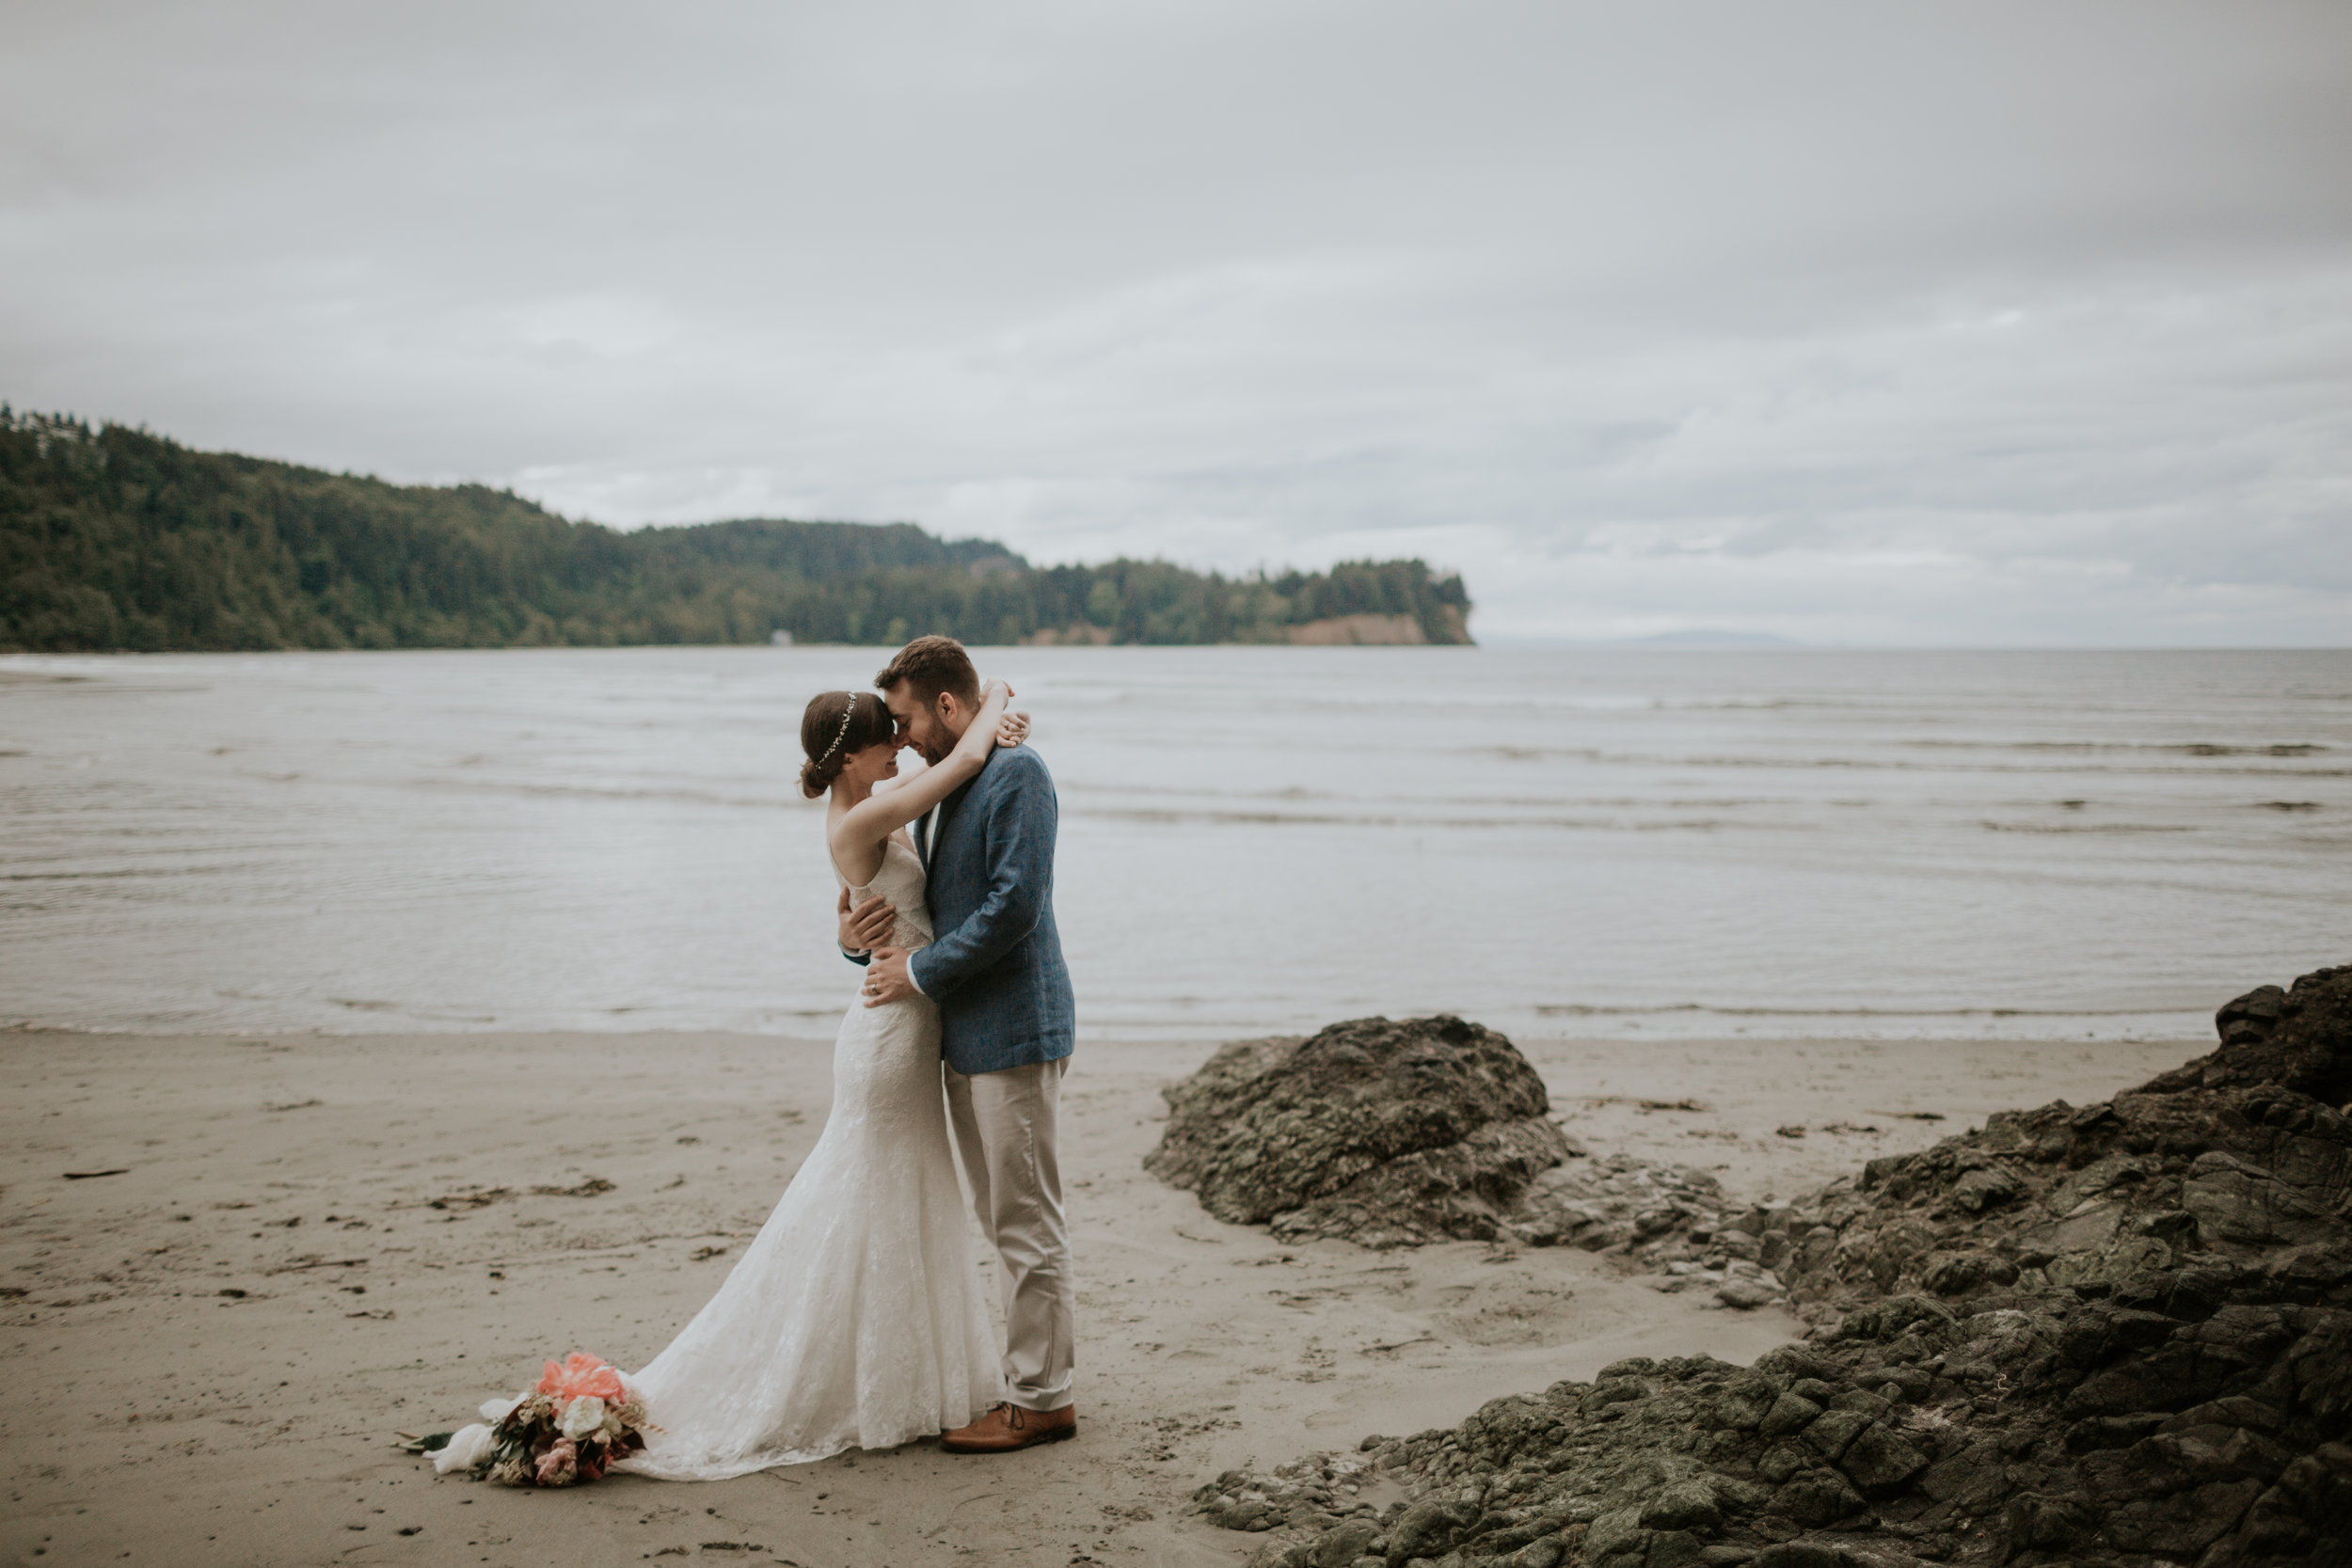 PNW-elopement-wedding-engagement-olympic national park-port angeles-hurricane ridge-lake crescent-kayla dawn photography- photographer-photography-kayladawnphoto-290.jpg